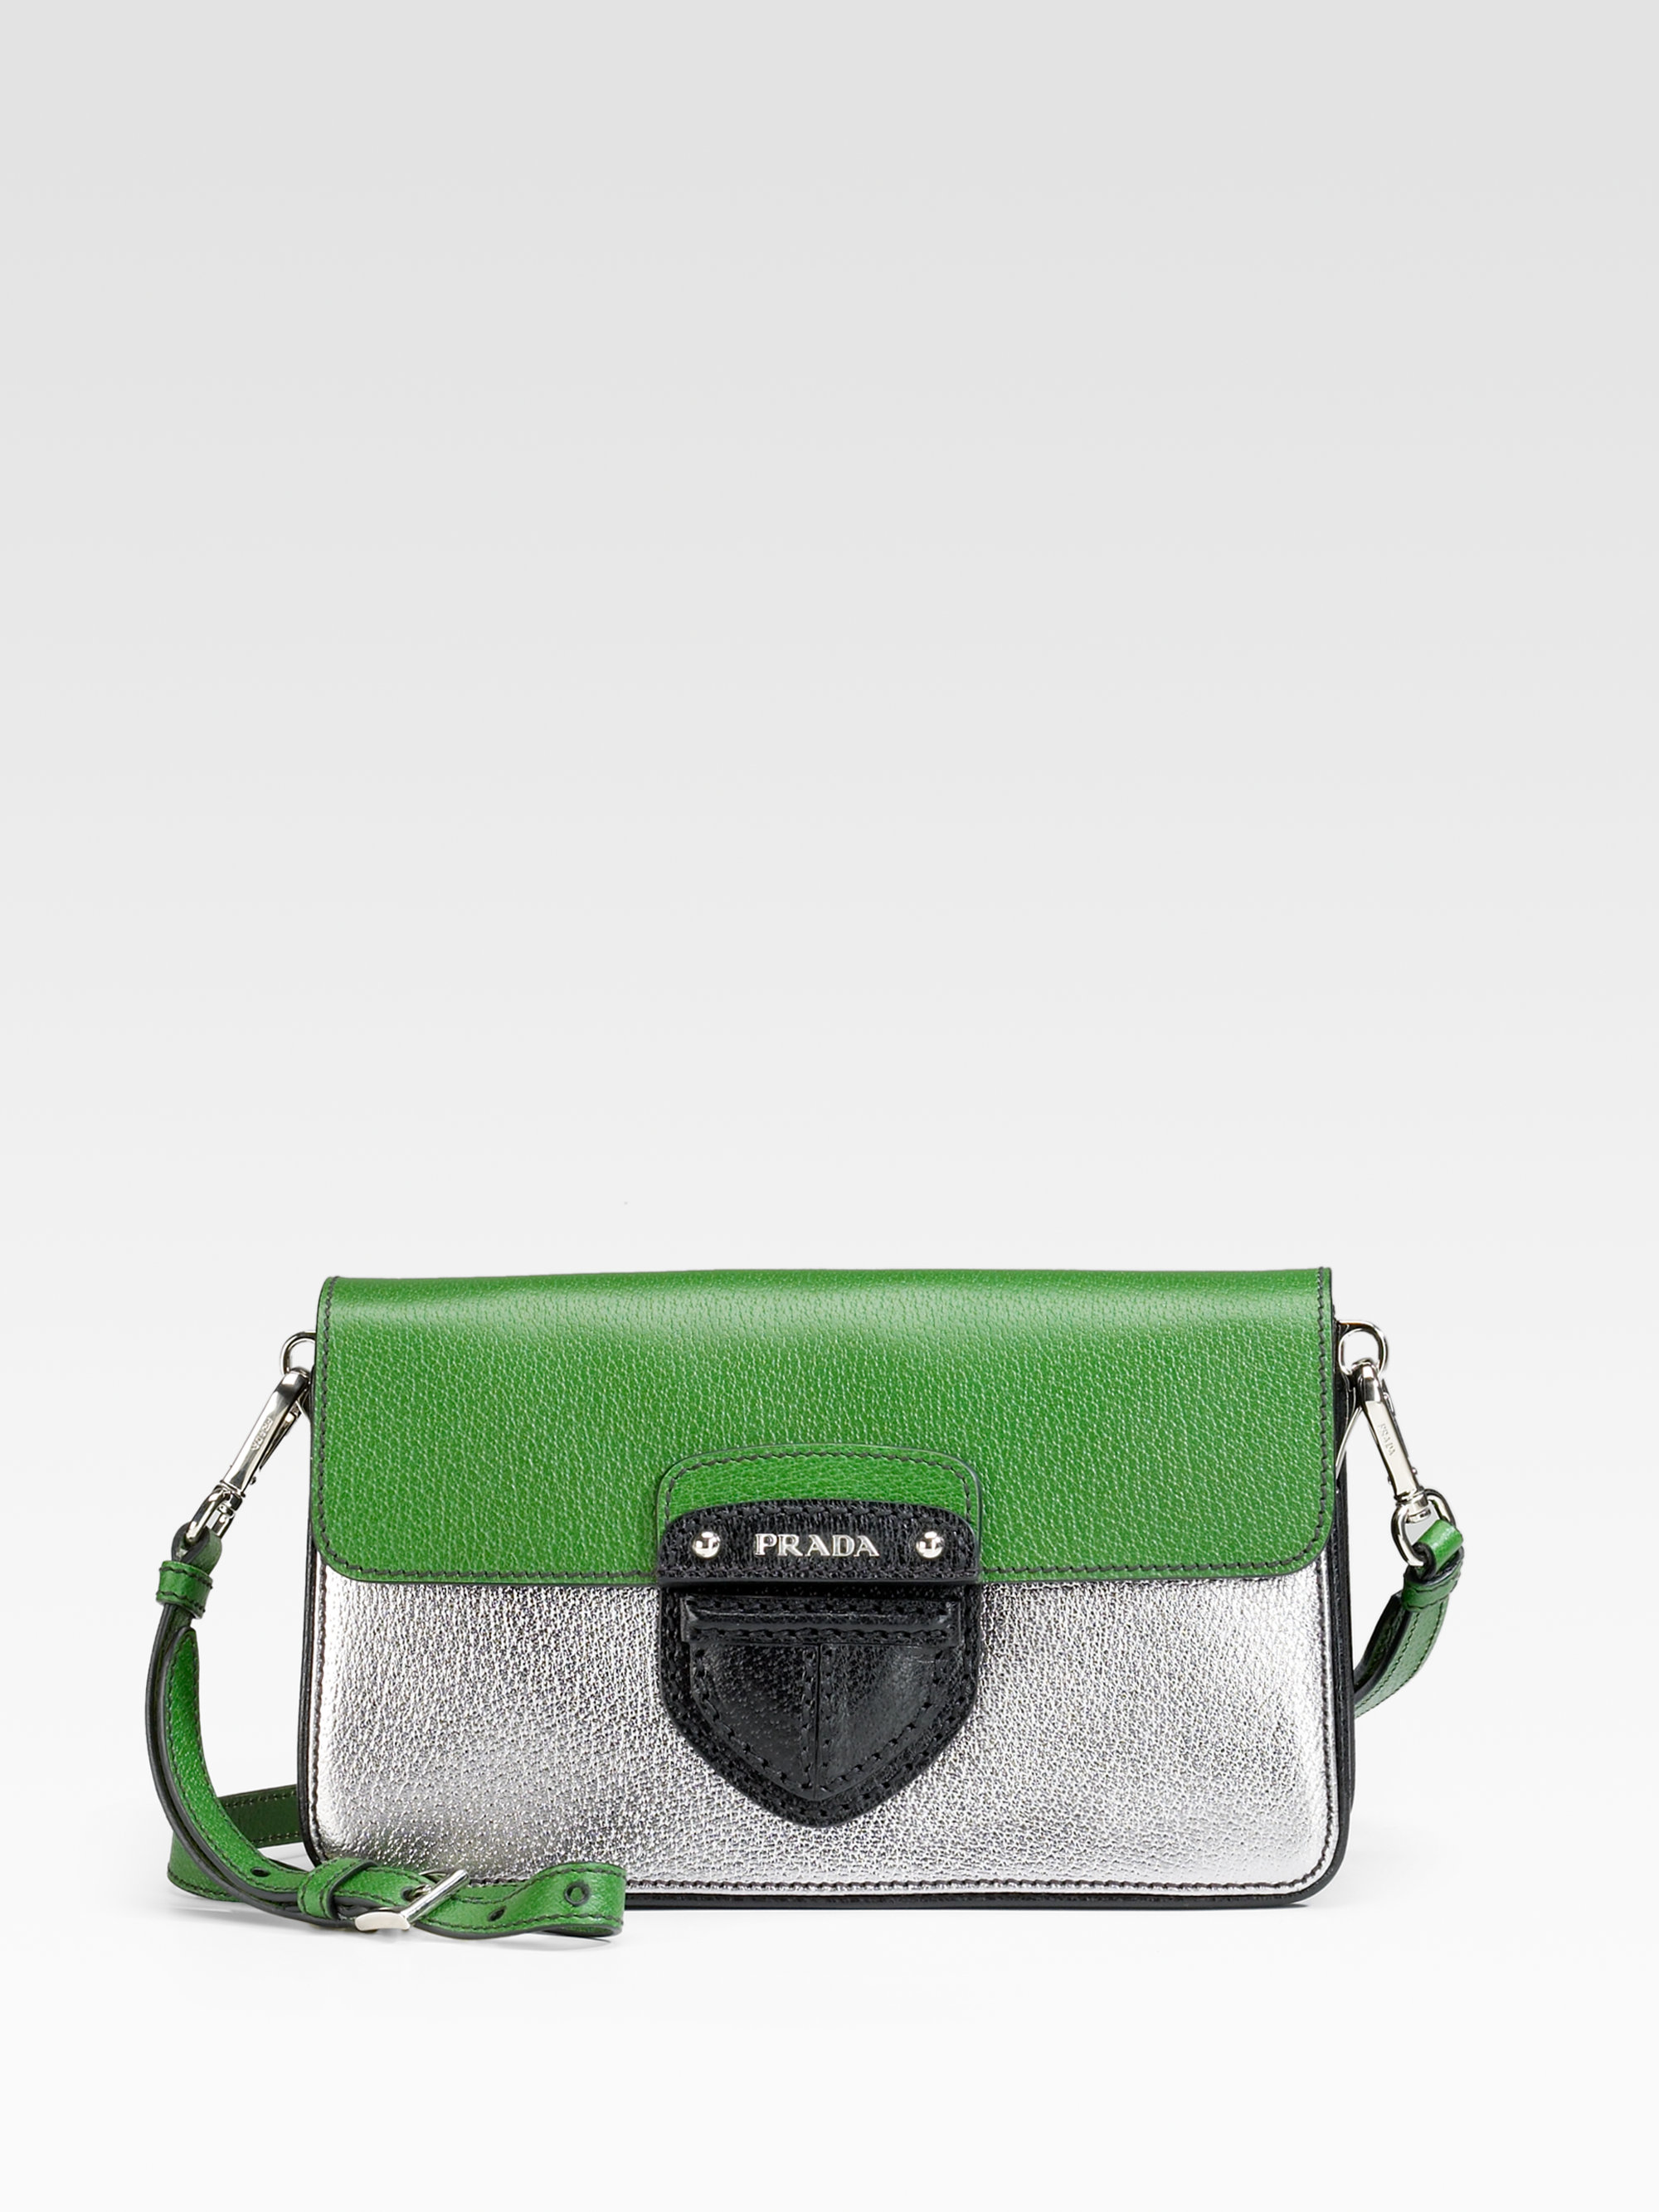 Prada Cinghiale Color Flap Bag in Green (green-silver) | Lyst  